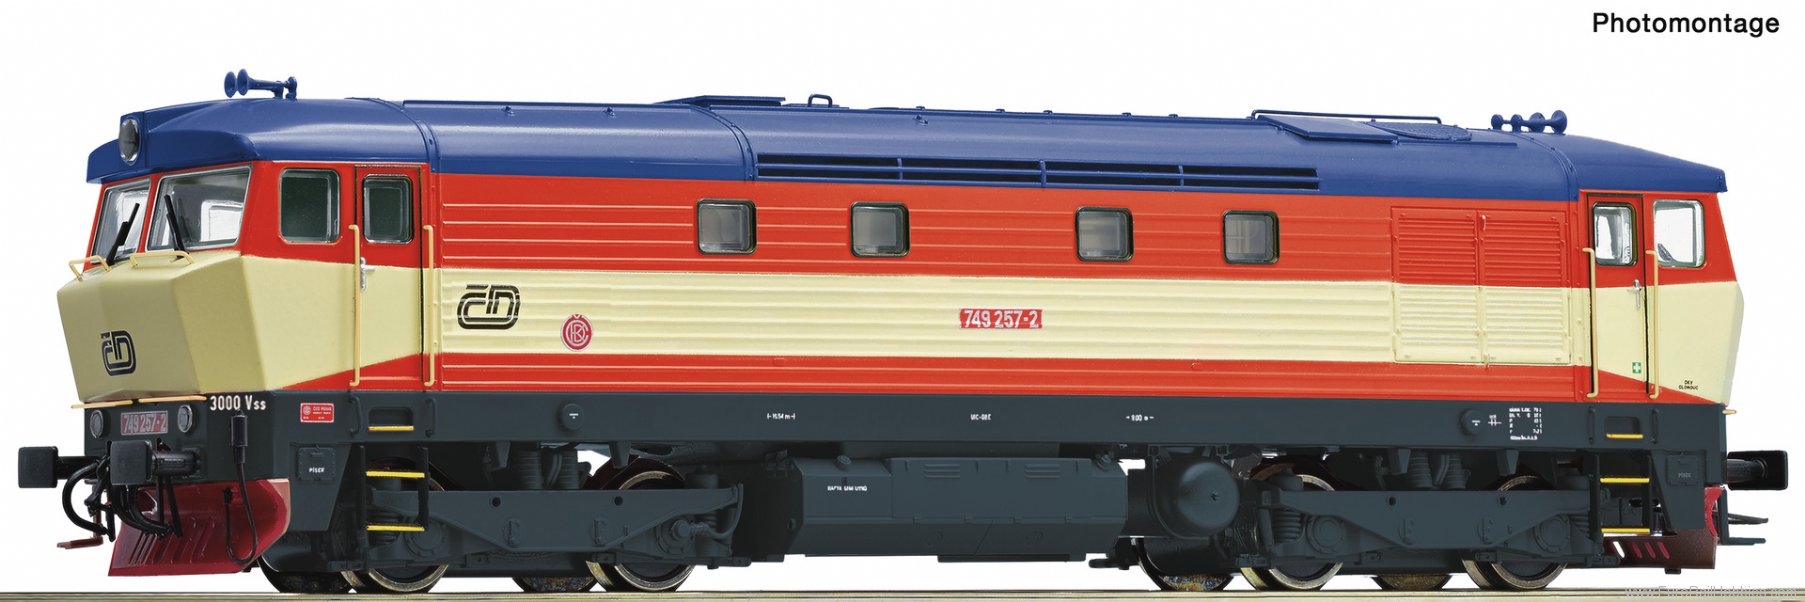 Roco 7310008 Diesel locomotive 749 257-2, CD (Digital Soun